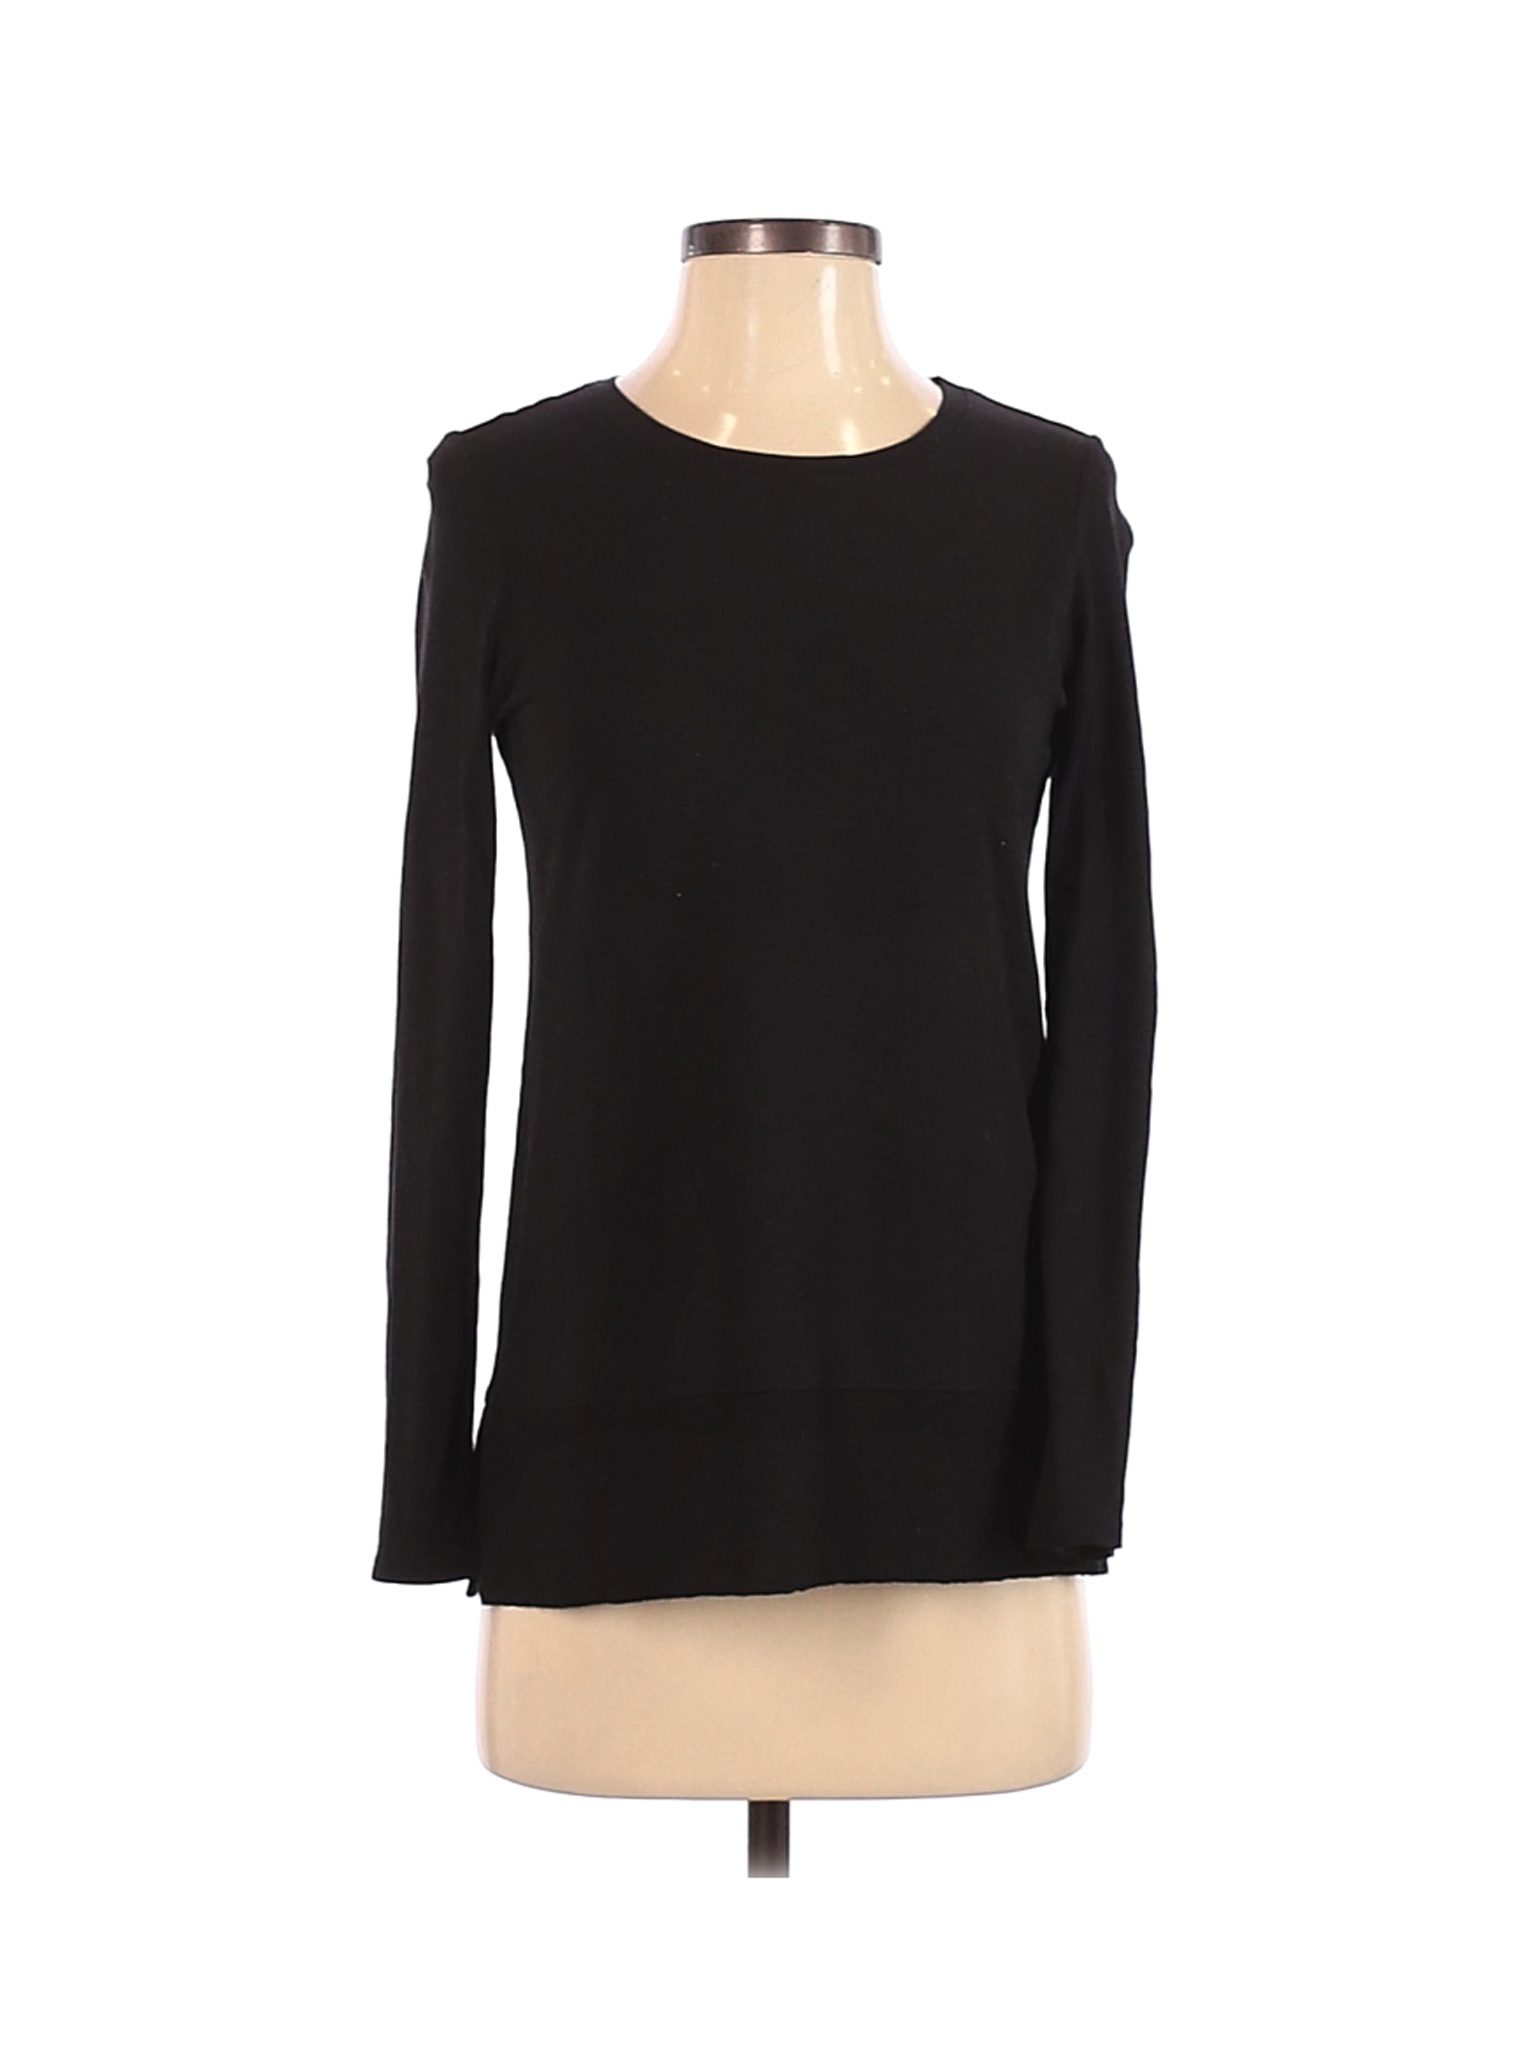 Sigrid Olsen Women Black Long Sleeve T-Shirt XS | eBay